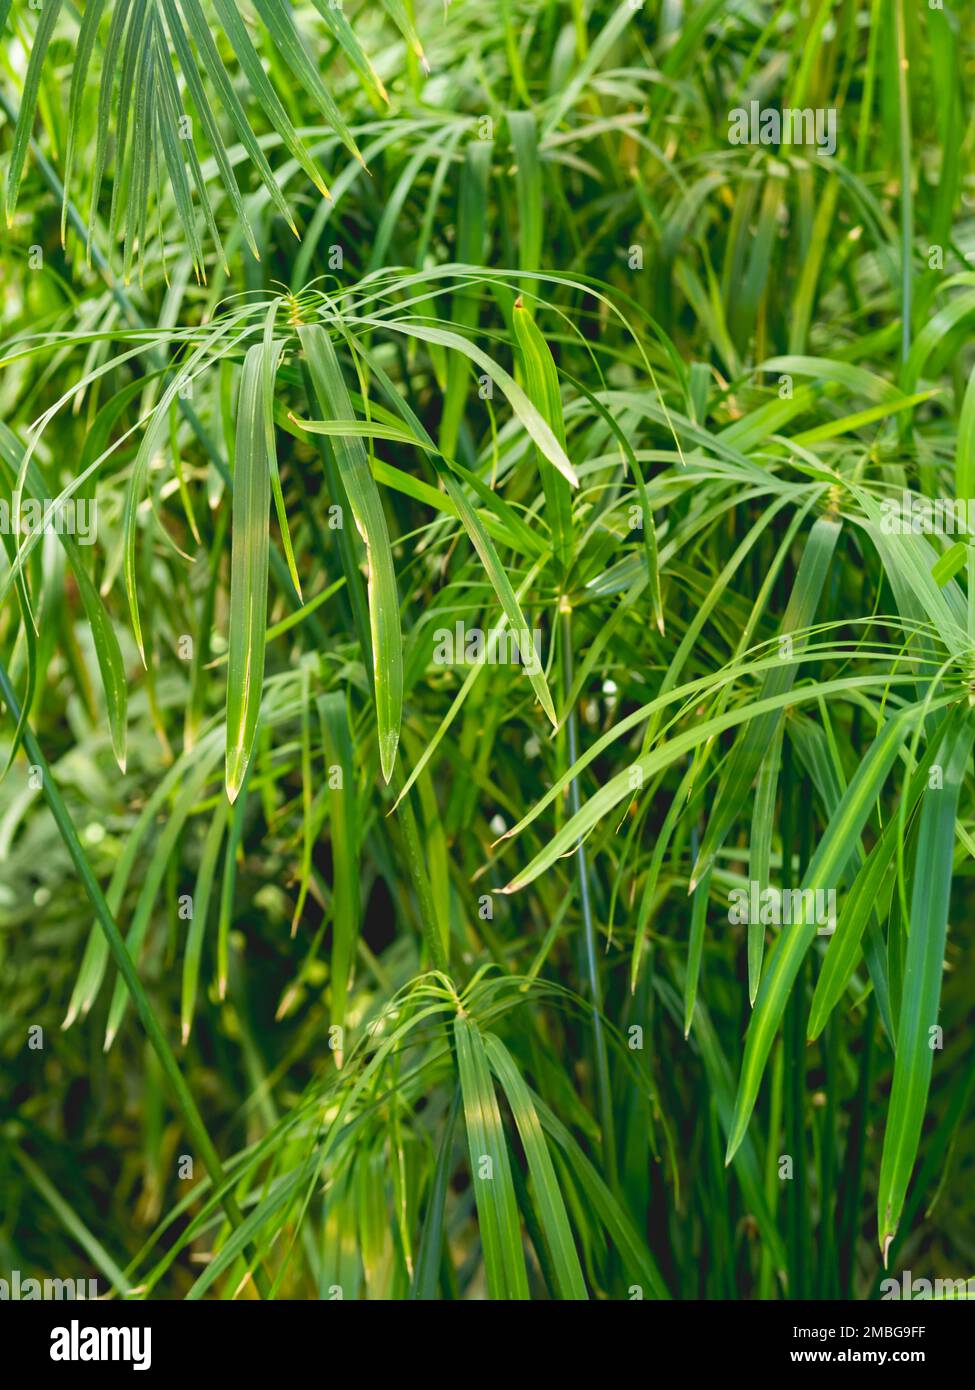 Full framed photo of Cyperus alternifolius, umbrella papyrus, umbrella sedge or umbrella palm. Green foliage of a grass-like plant. Stock Photo